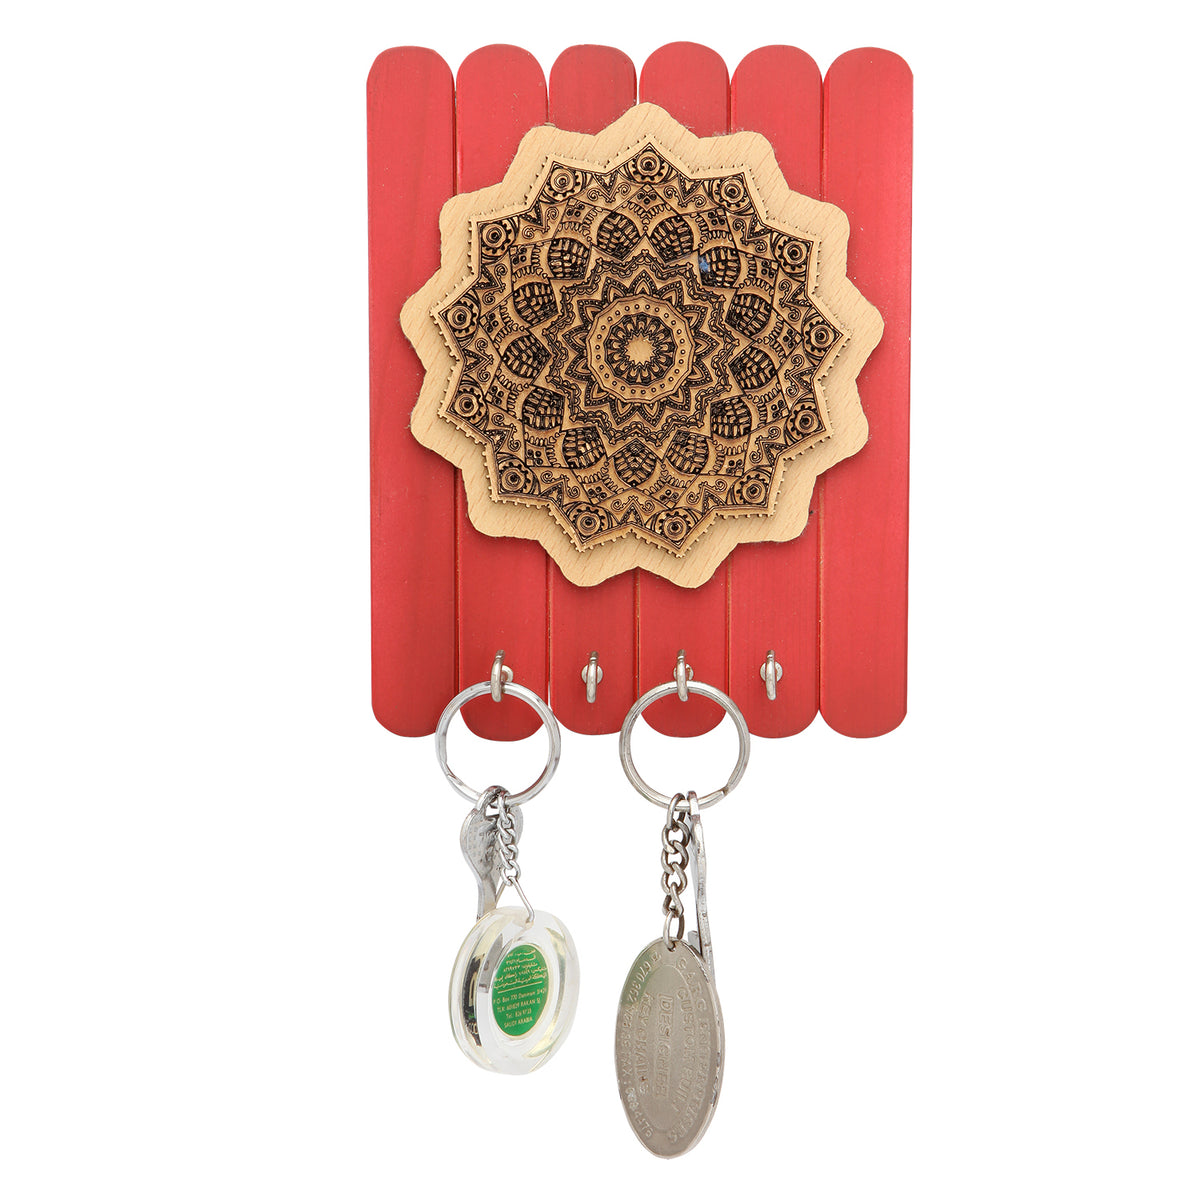 Wood Key Holder With Carved Mandala Motif